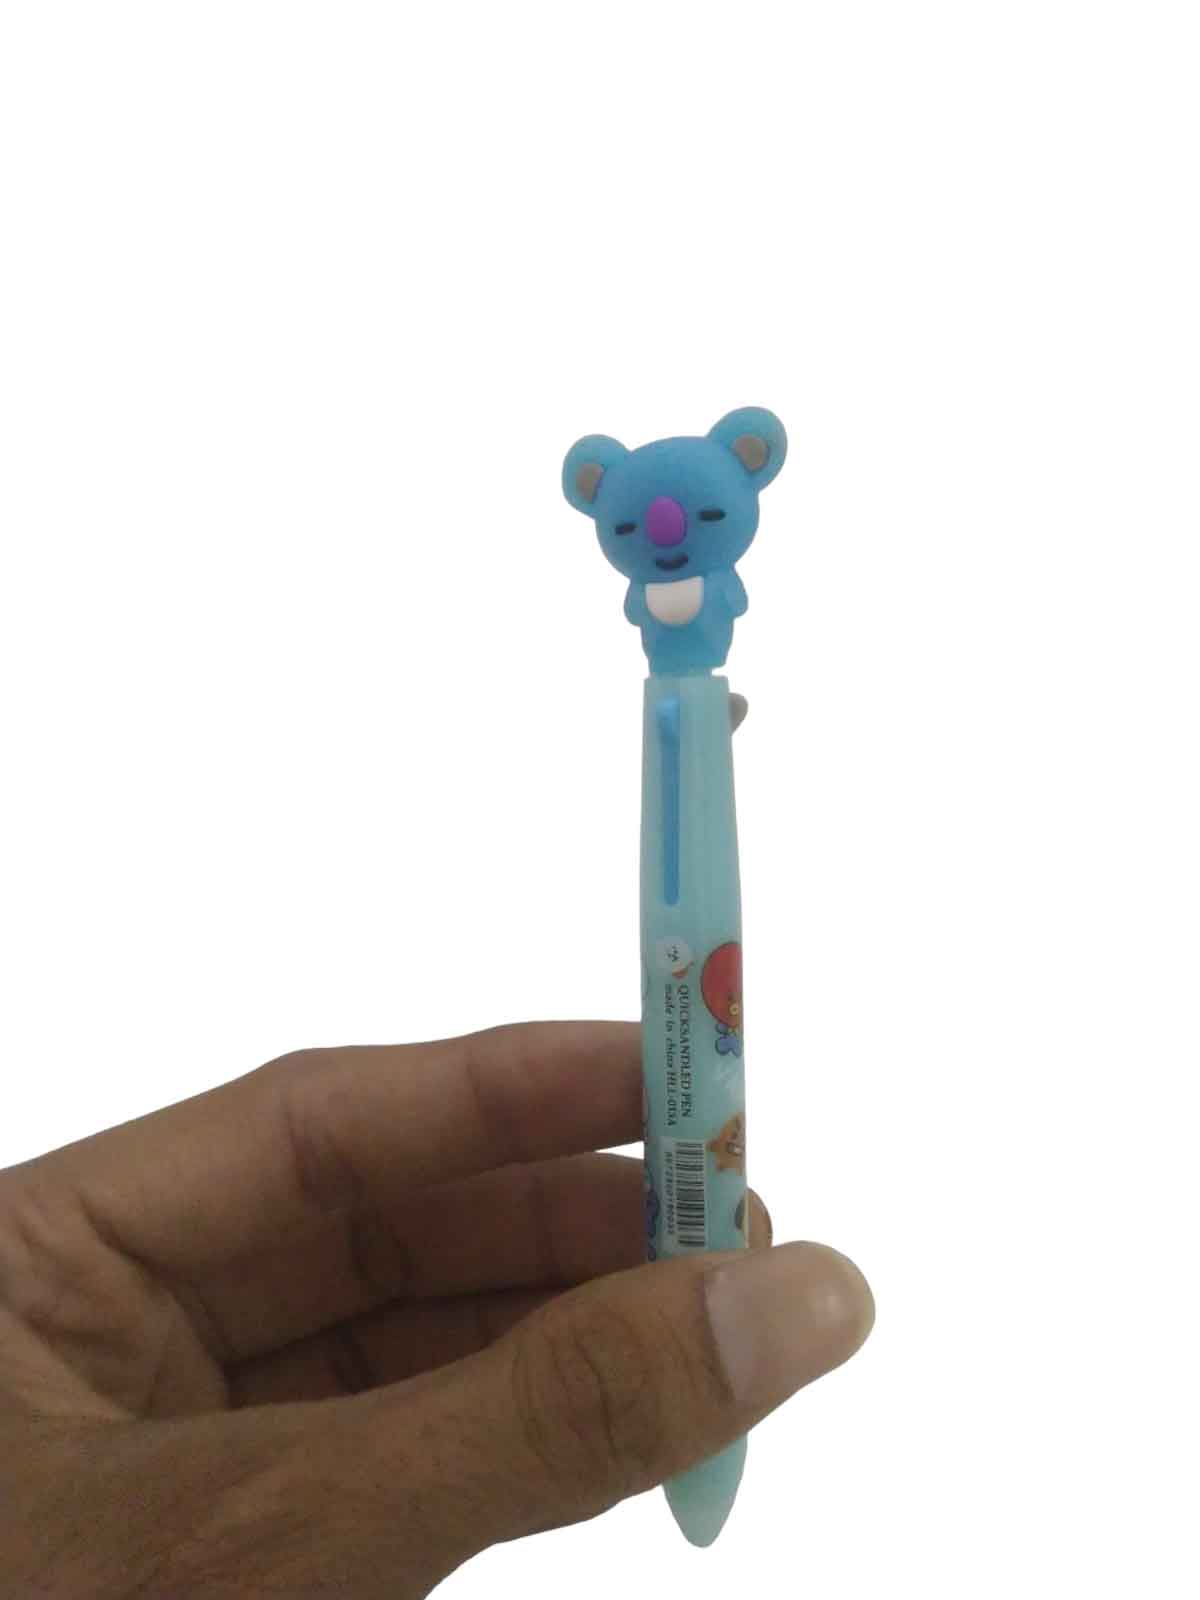 3 Refill Pen - Multi-Color with Cool Heart & Animal Topper - For Kids, School & Birthday Return Gift (Pack of 6) & (Pack of 12) - Apkamart